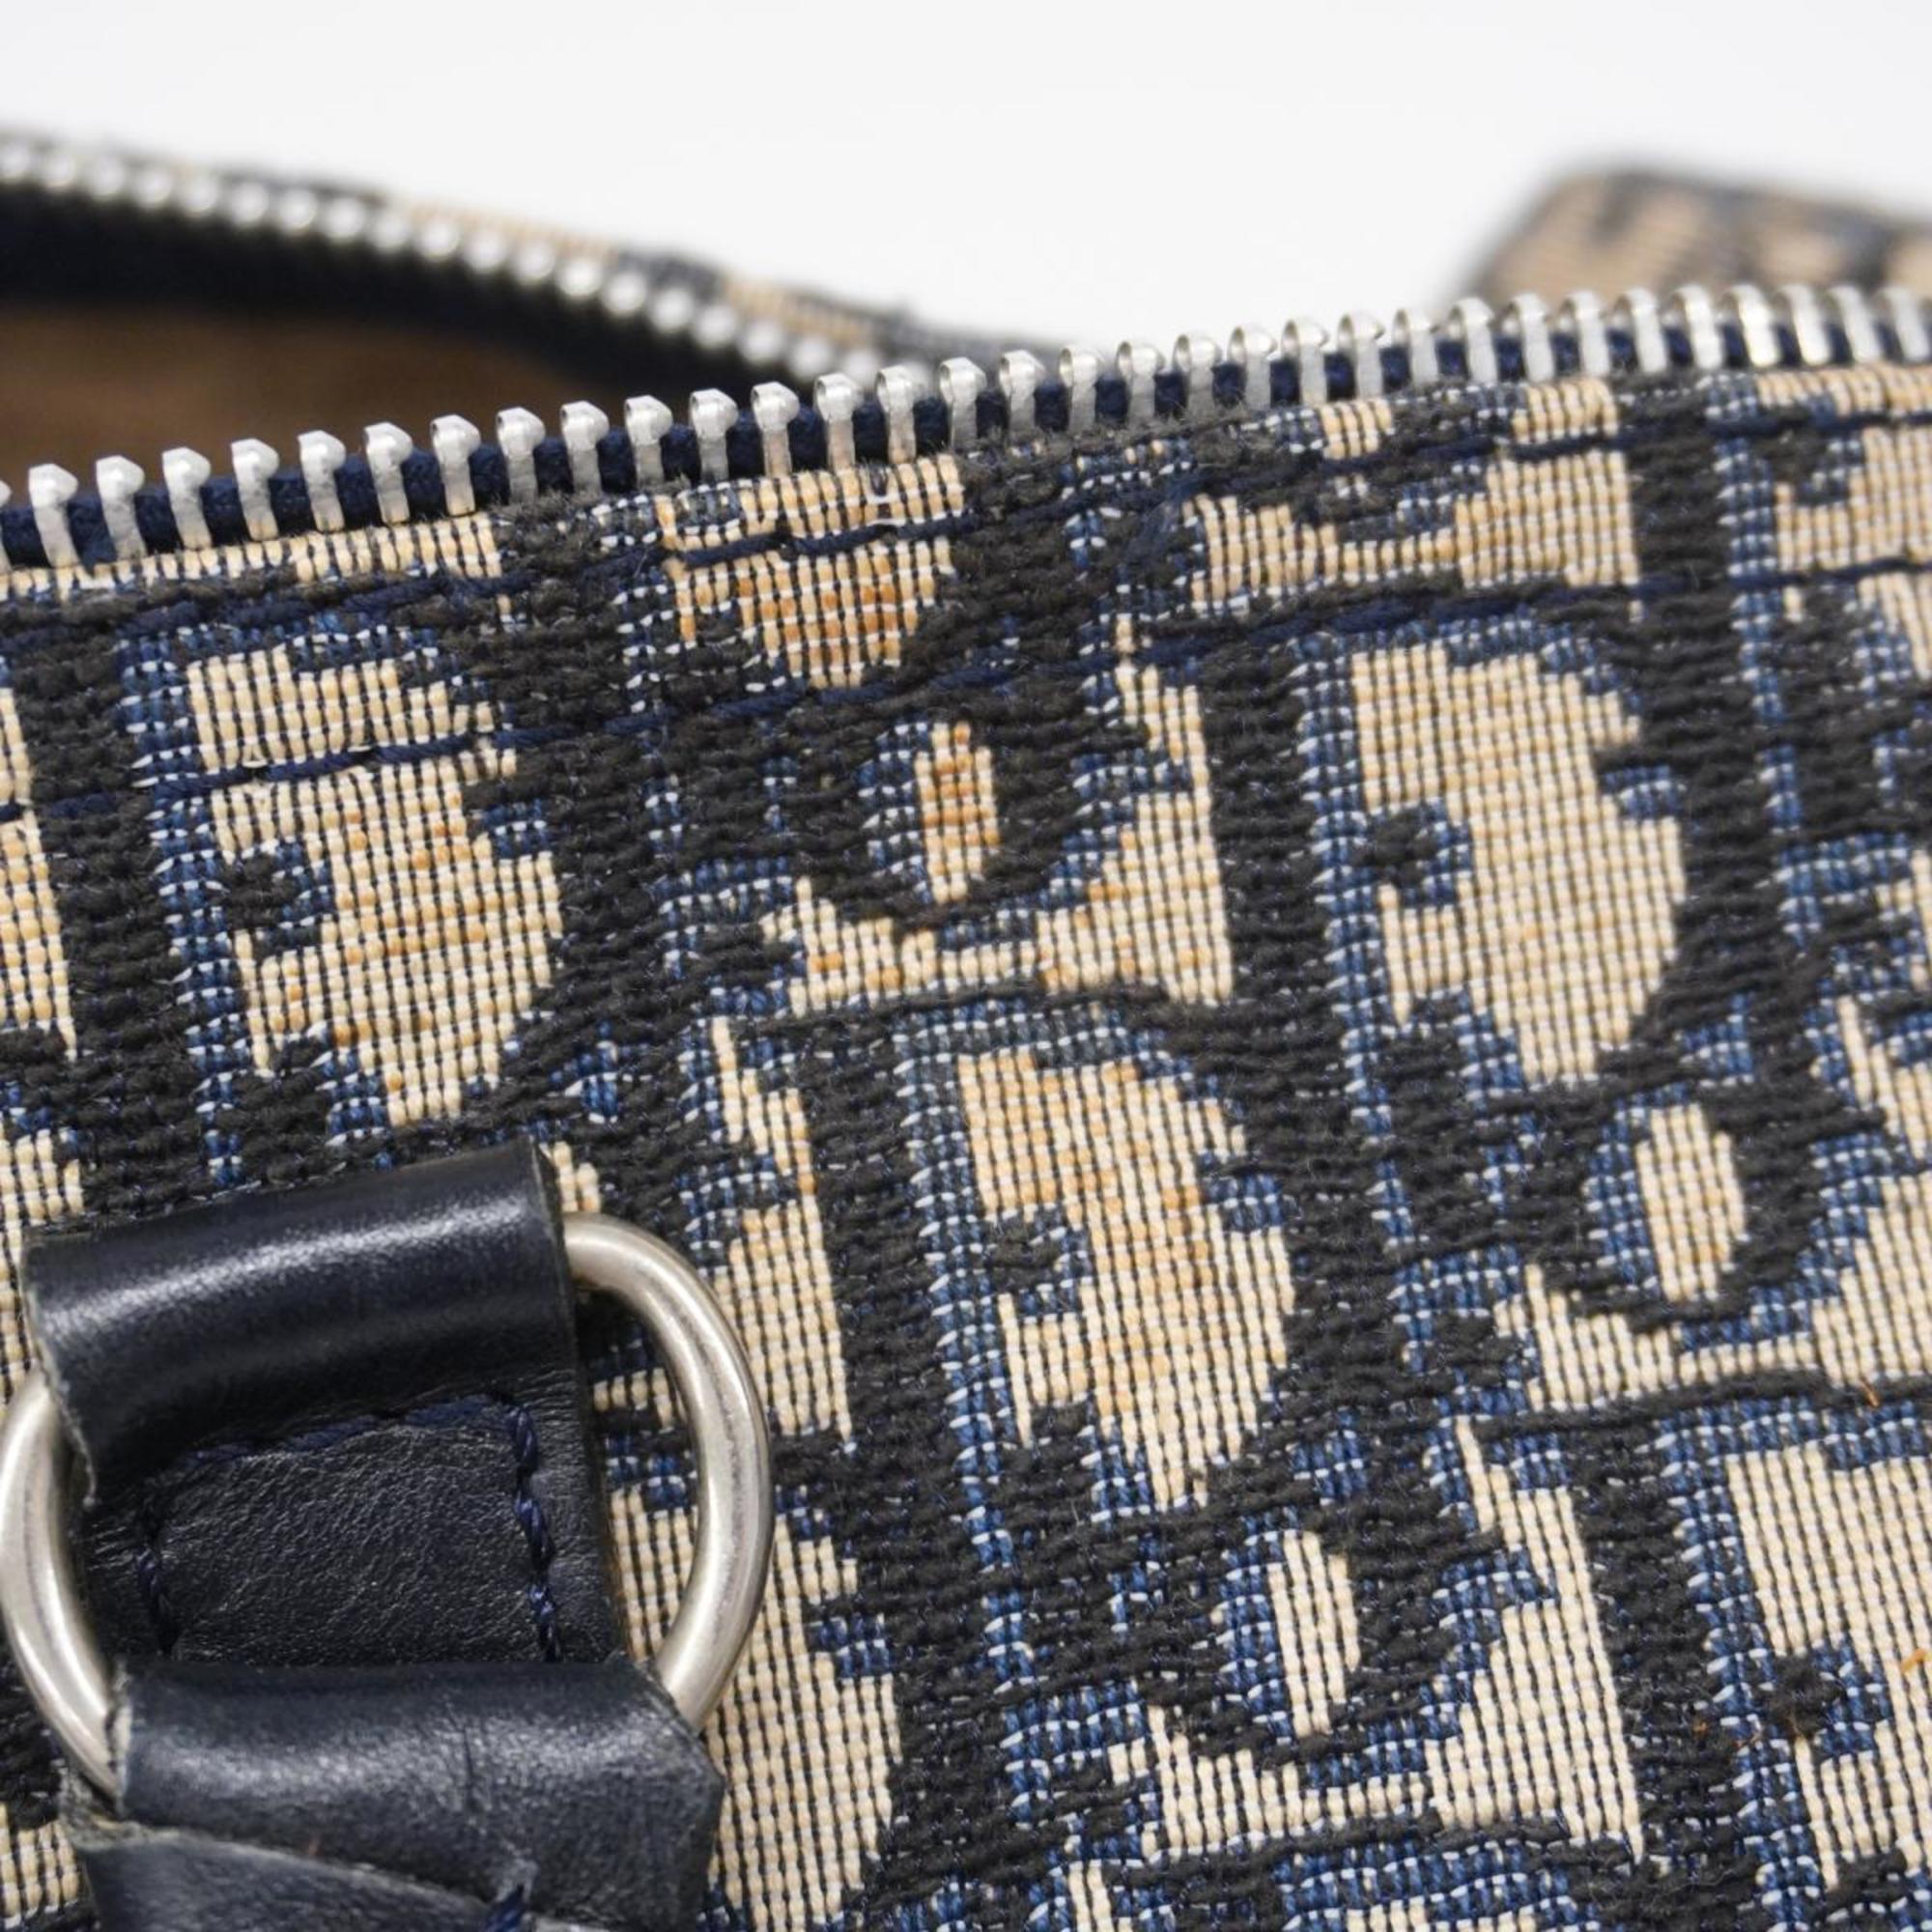 Christian Dior handbag Trotter canvas leather navy ladies